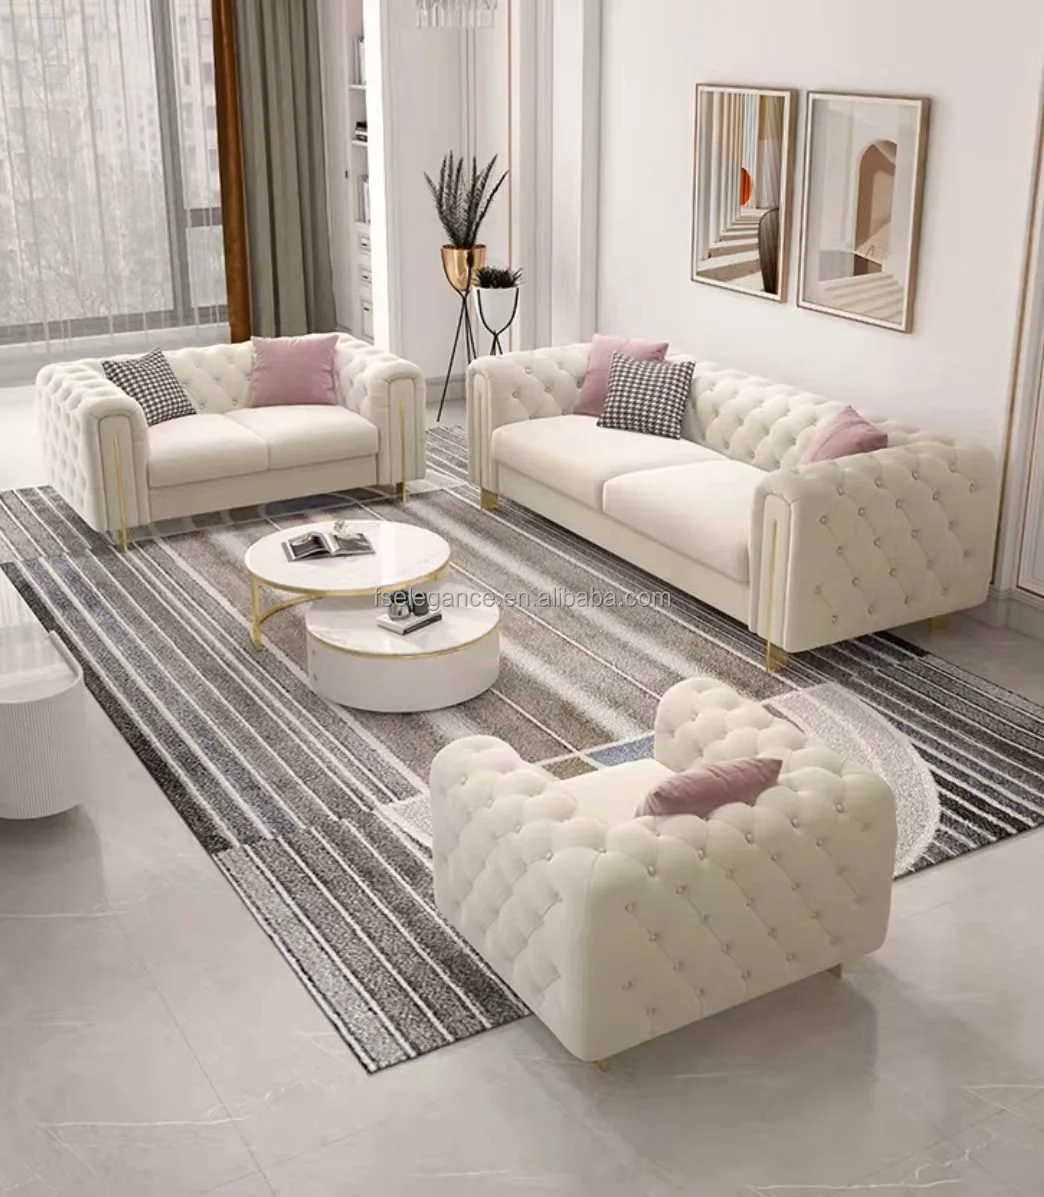 modern leather furniture 2 seats simple sofa designs sofa set furniture sale modern sofa nepal furniture set